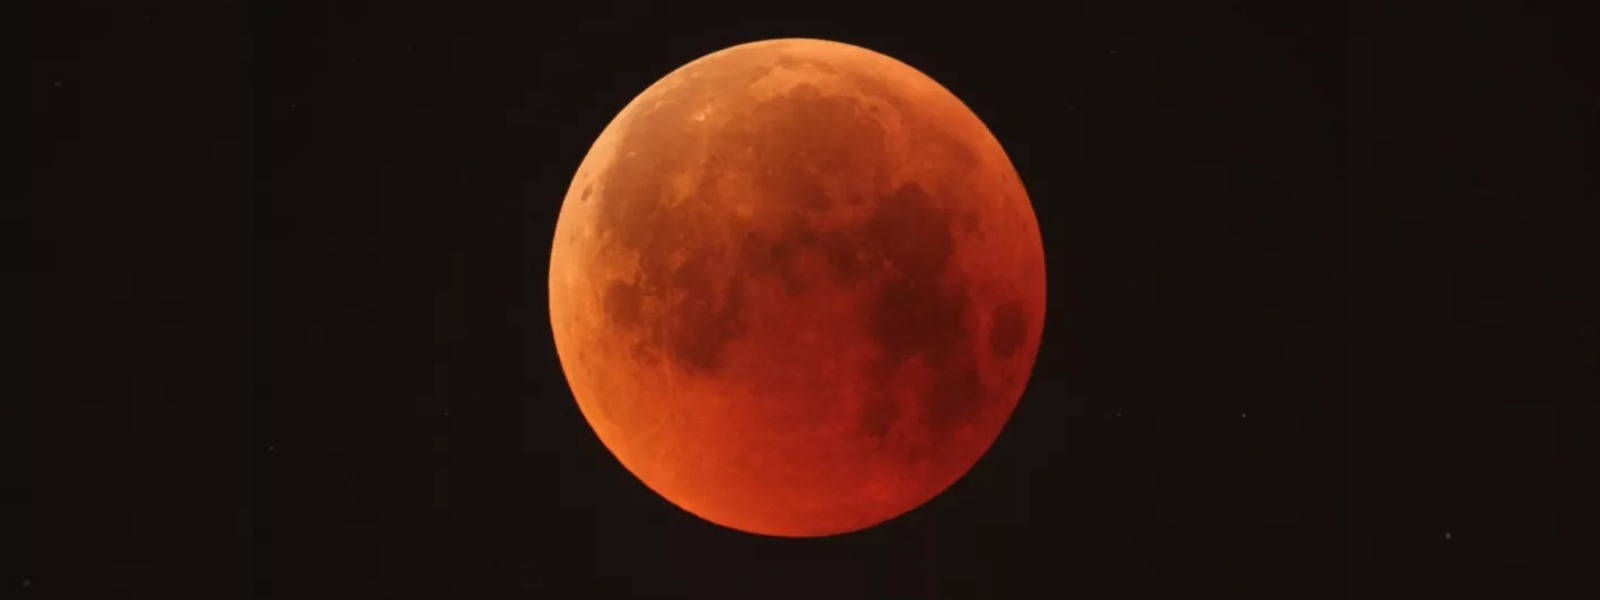 Blood Moon lunar eclipse on 8th November